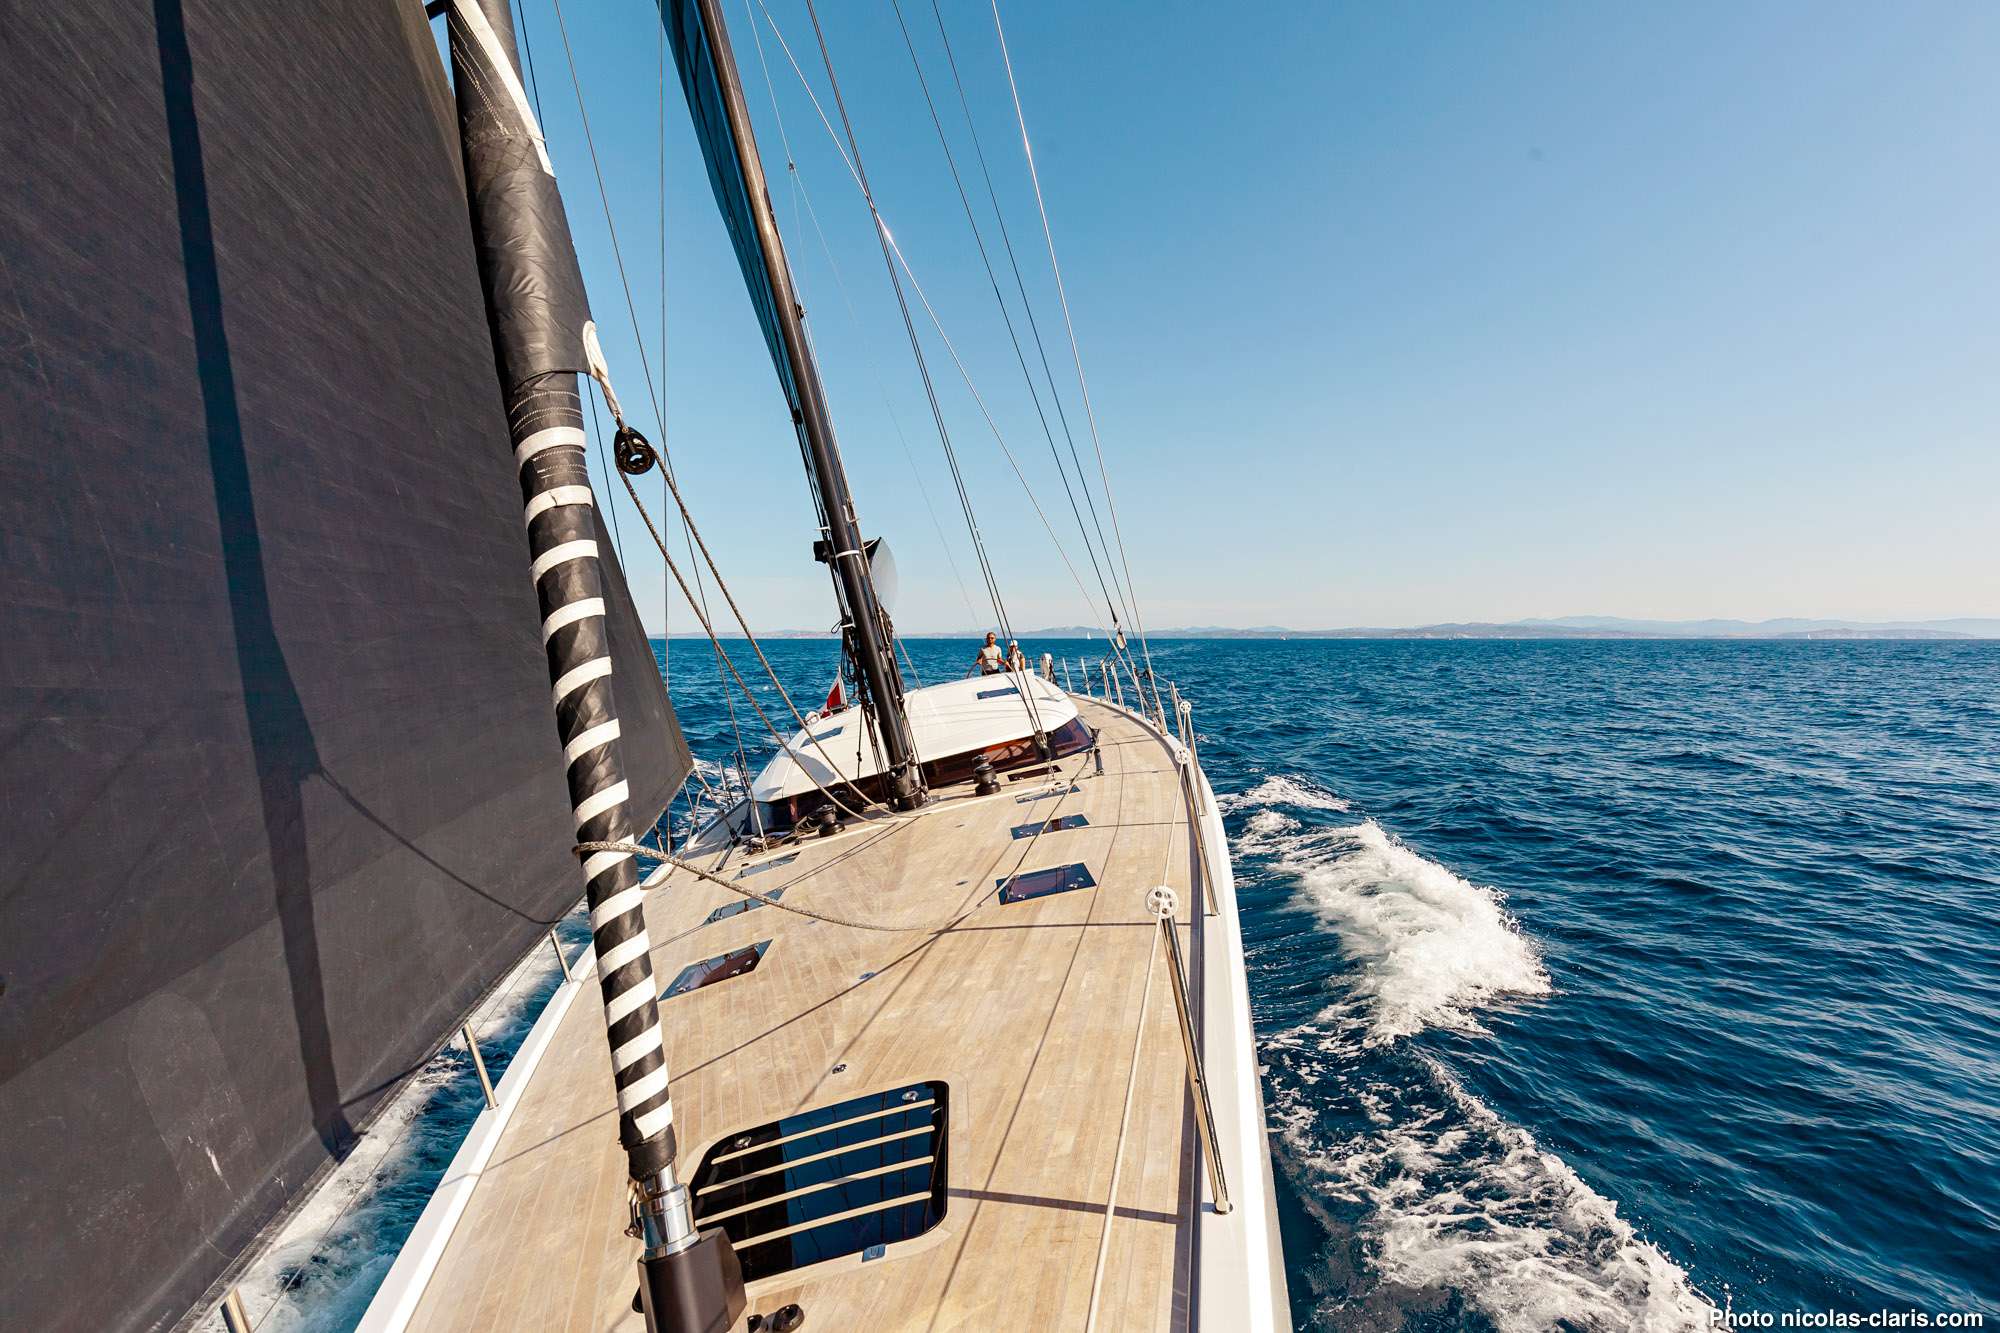 CNB76 2021 - Yacht Charter Poltu Quatu & Boat hire in W. Med -Naples/Sicily, Greece, W. Med -Riviera/Cors/Sard., Turkey, Croatia | Winter: Caribbean Virgin Islands (US/BVI), Caribbean Leewards, Caribbean Windwards 4